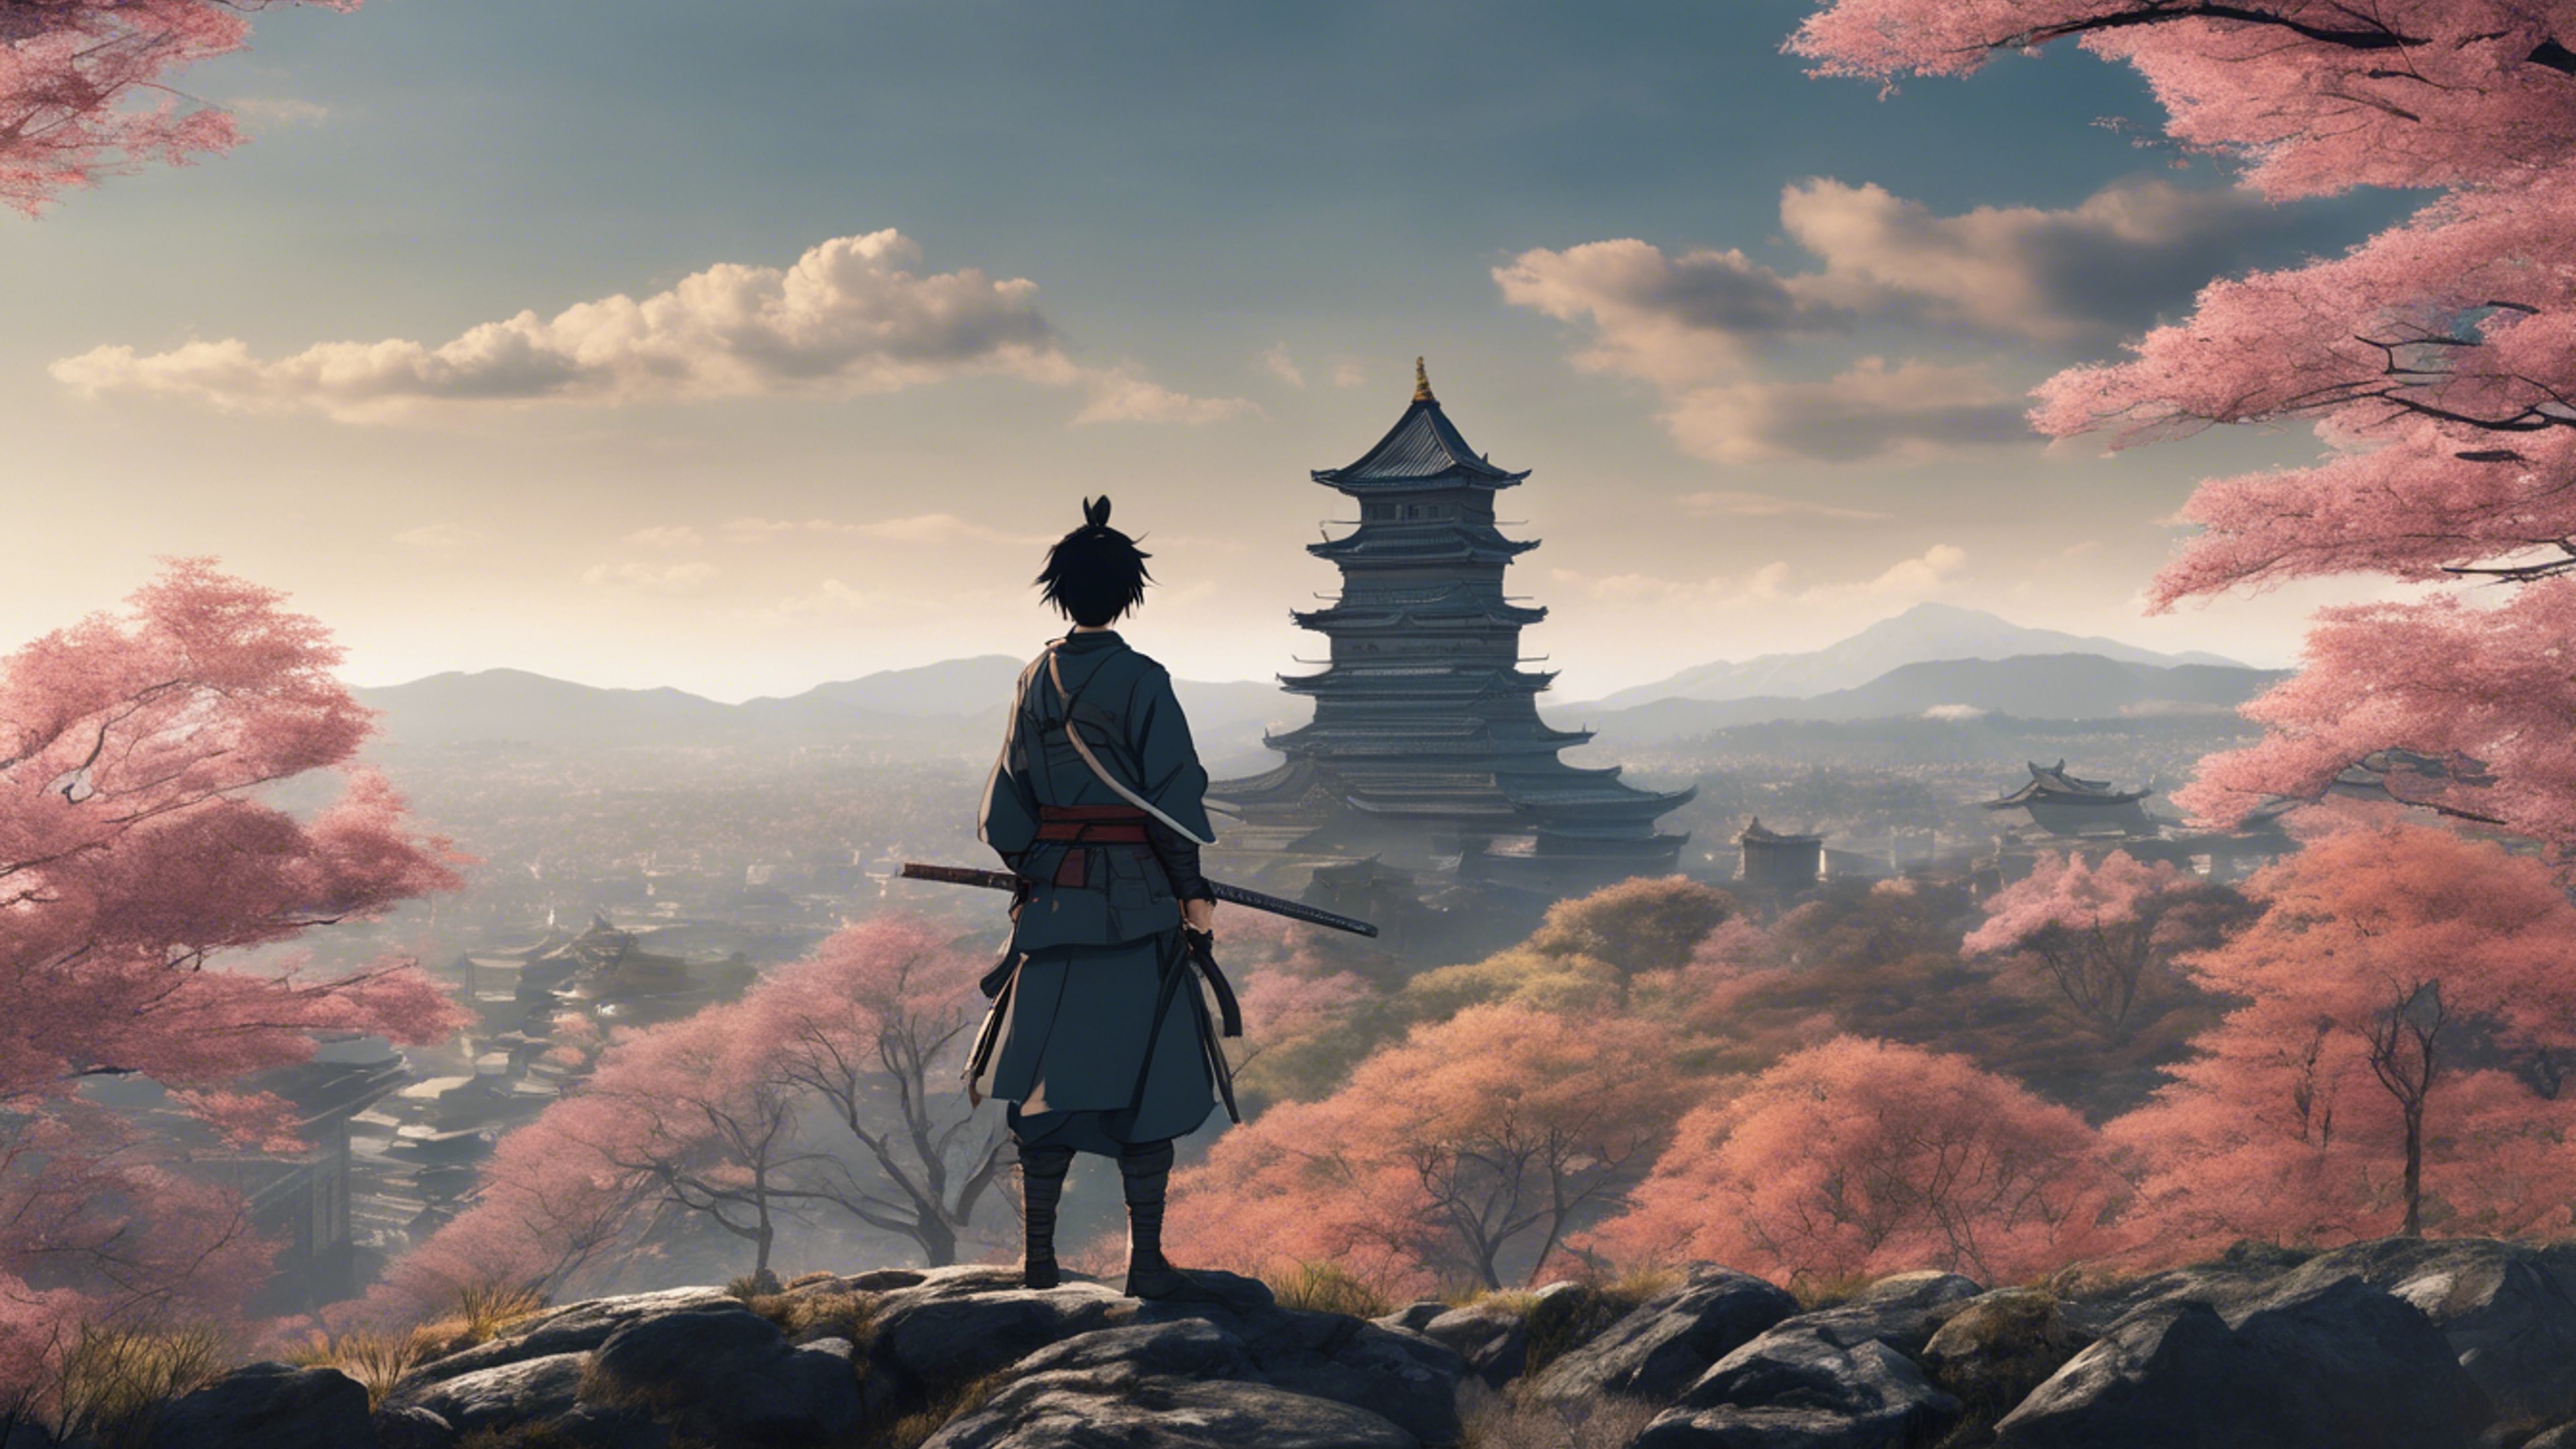 Anime samurai boy standing on a rocky hillside and looking towards a feudal-era Japanese castle. ផ្ទាំង​រូបភាព[9402636a9a6e4b8c90bb]